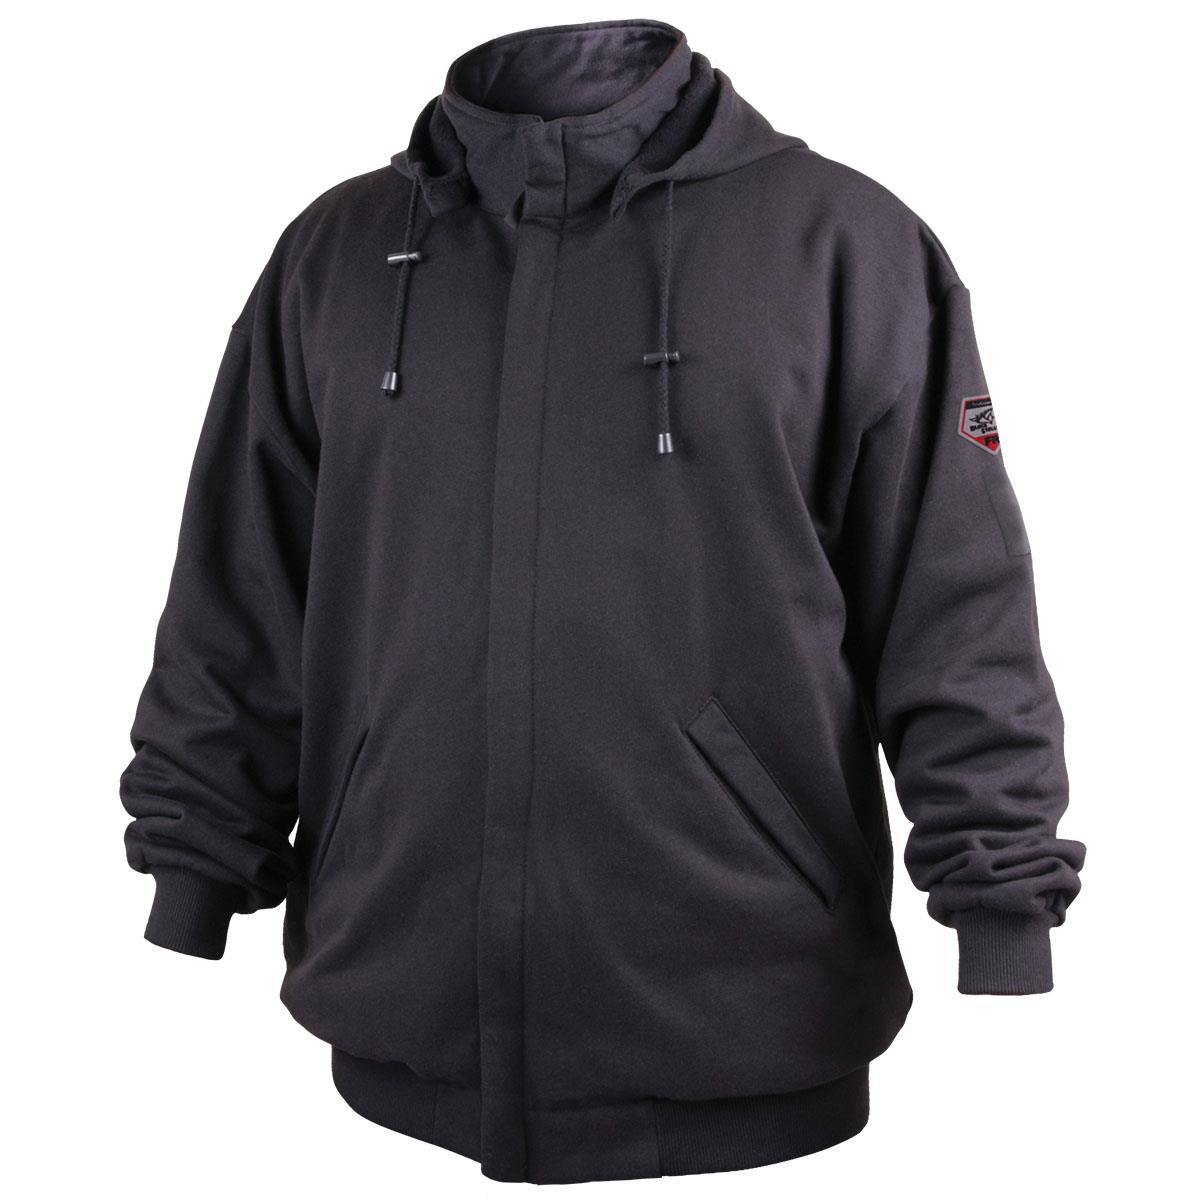 TRUGUARD 200 FR COTTON SWEATSHIRT BLACK - Jackets & Sweatshirts